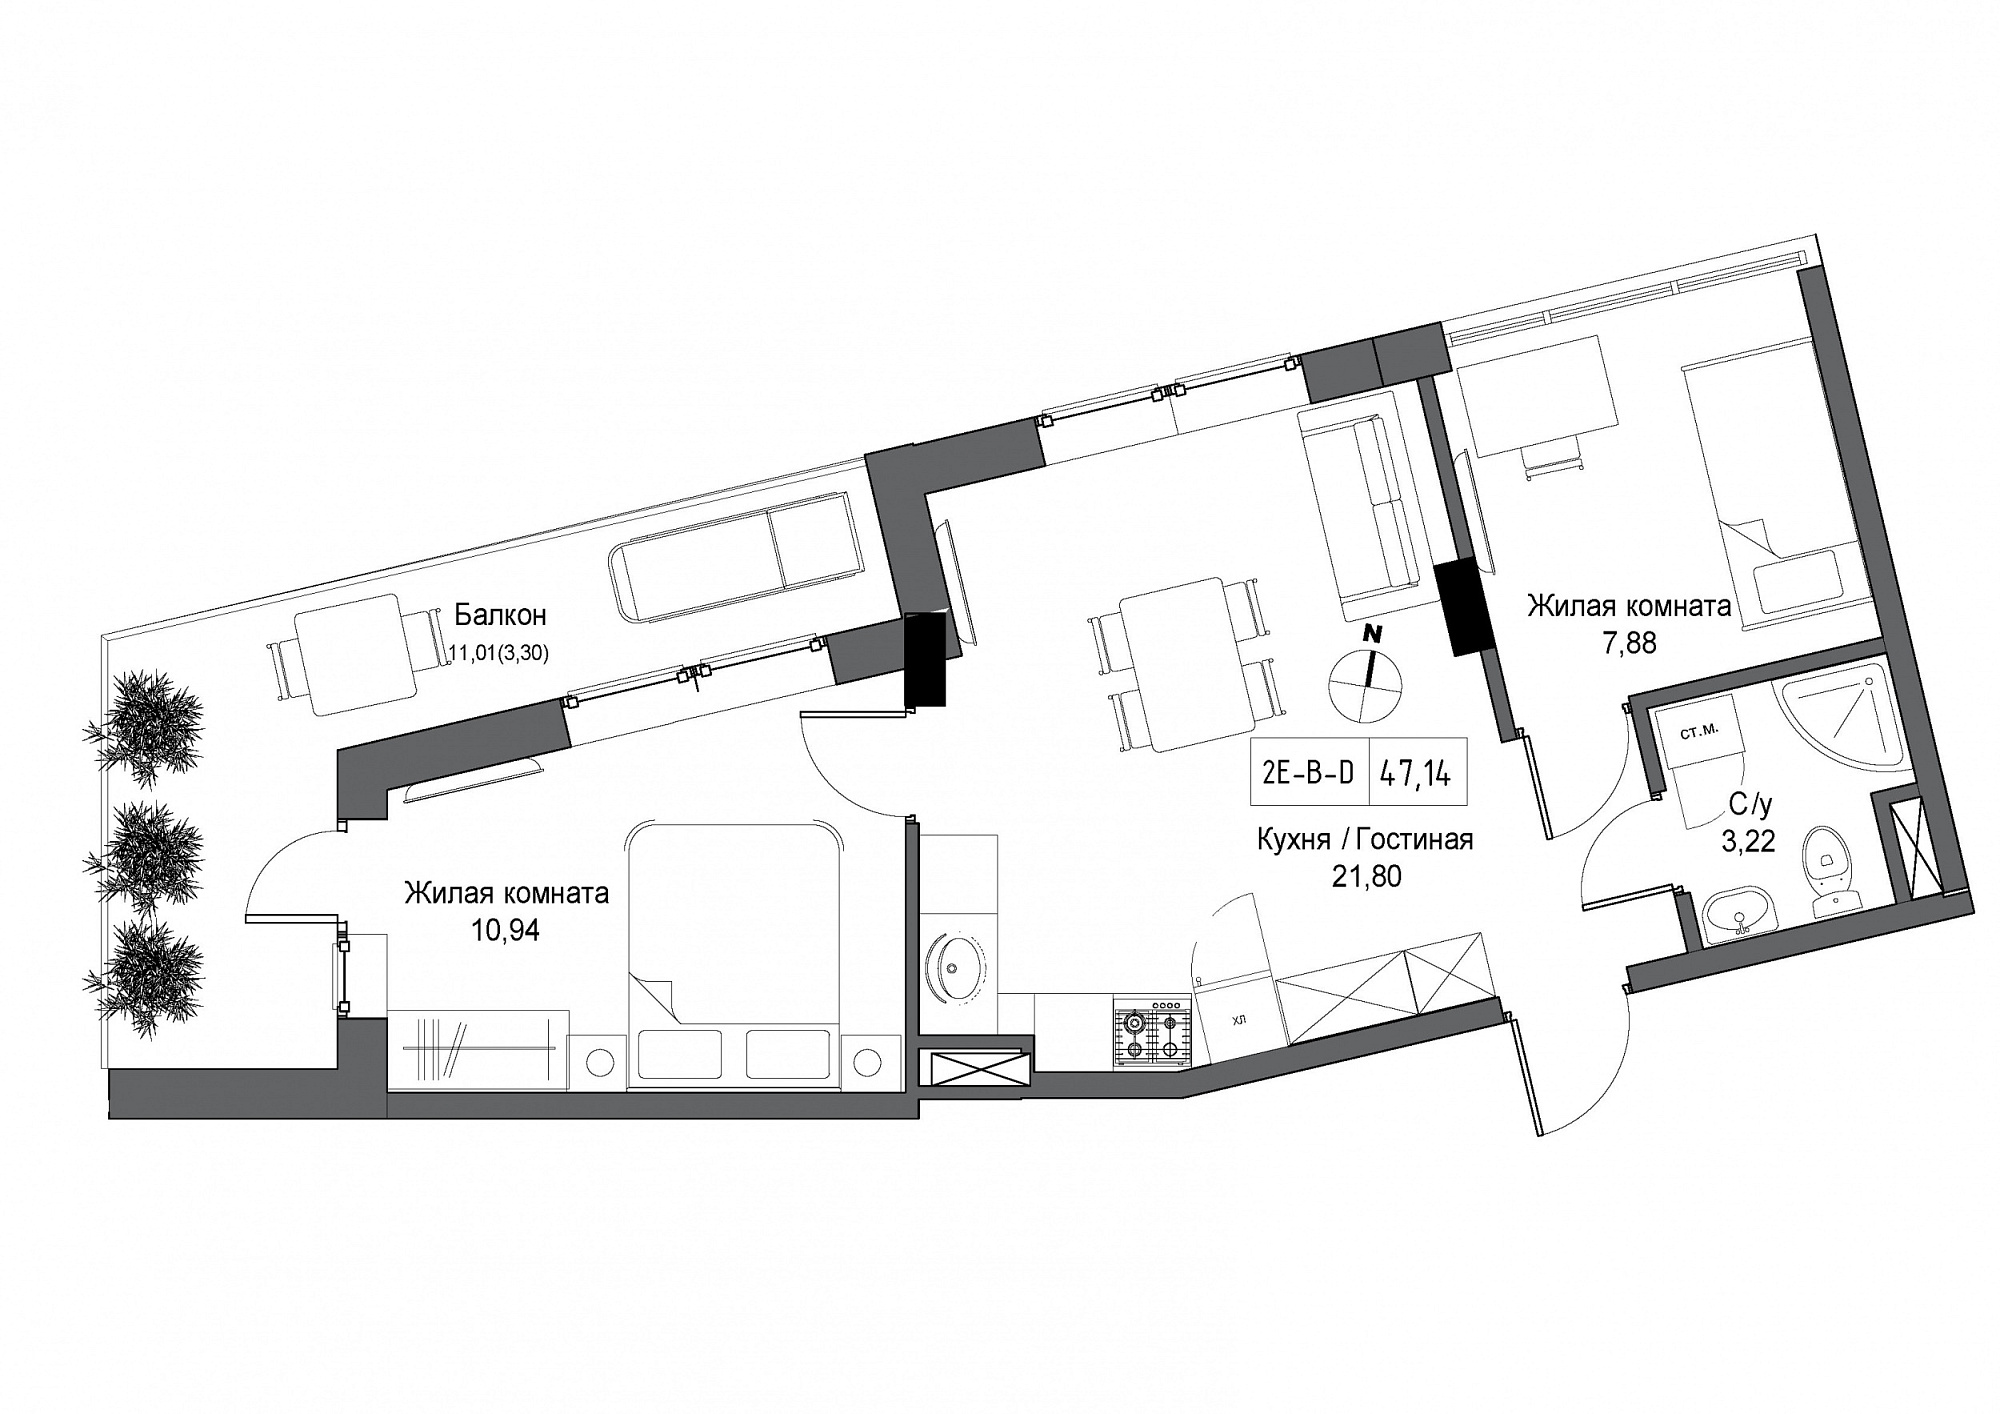 Planning 2-rm flats area 47.14m2, UM-004-09/0015.